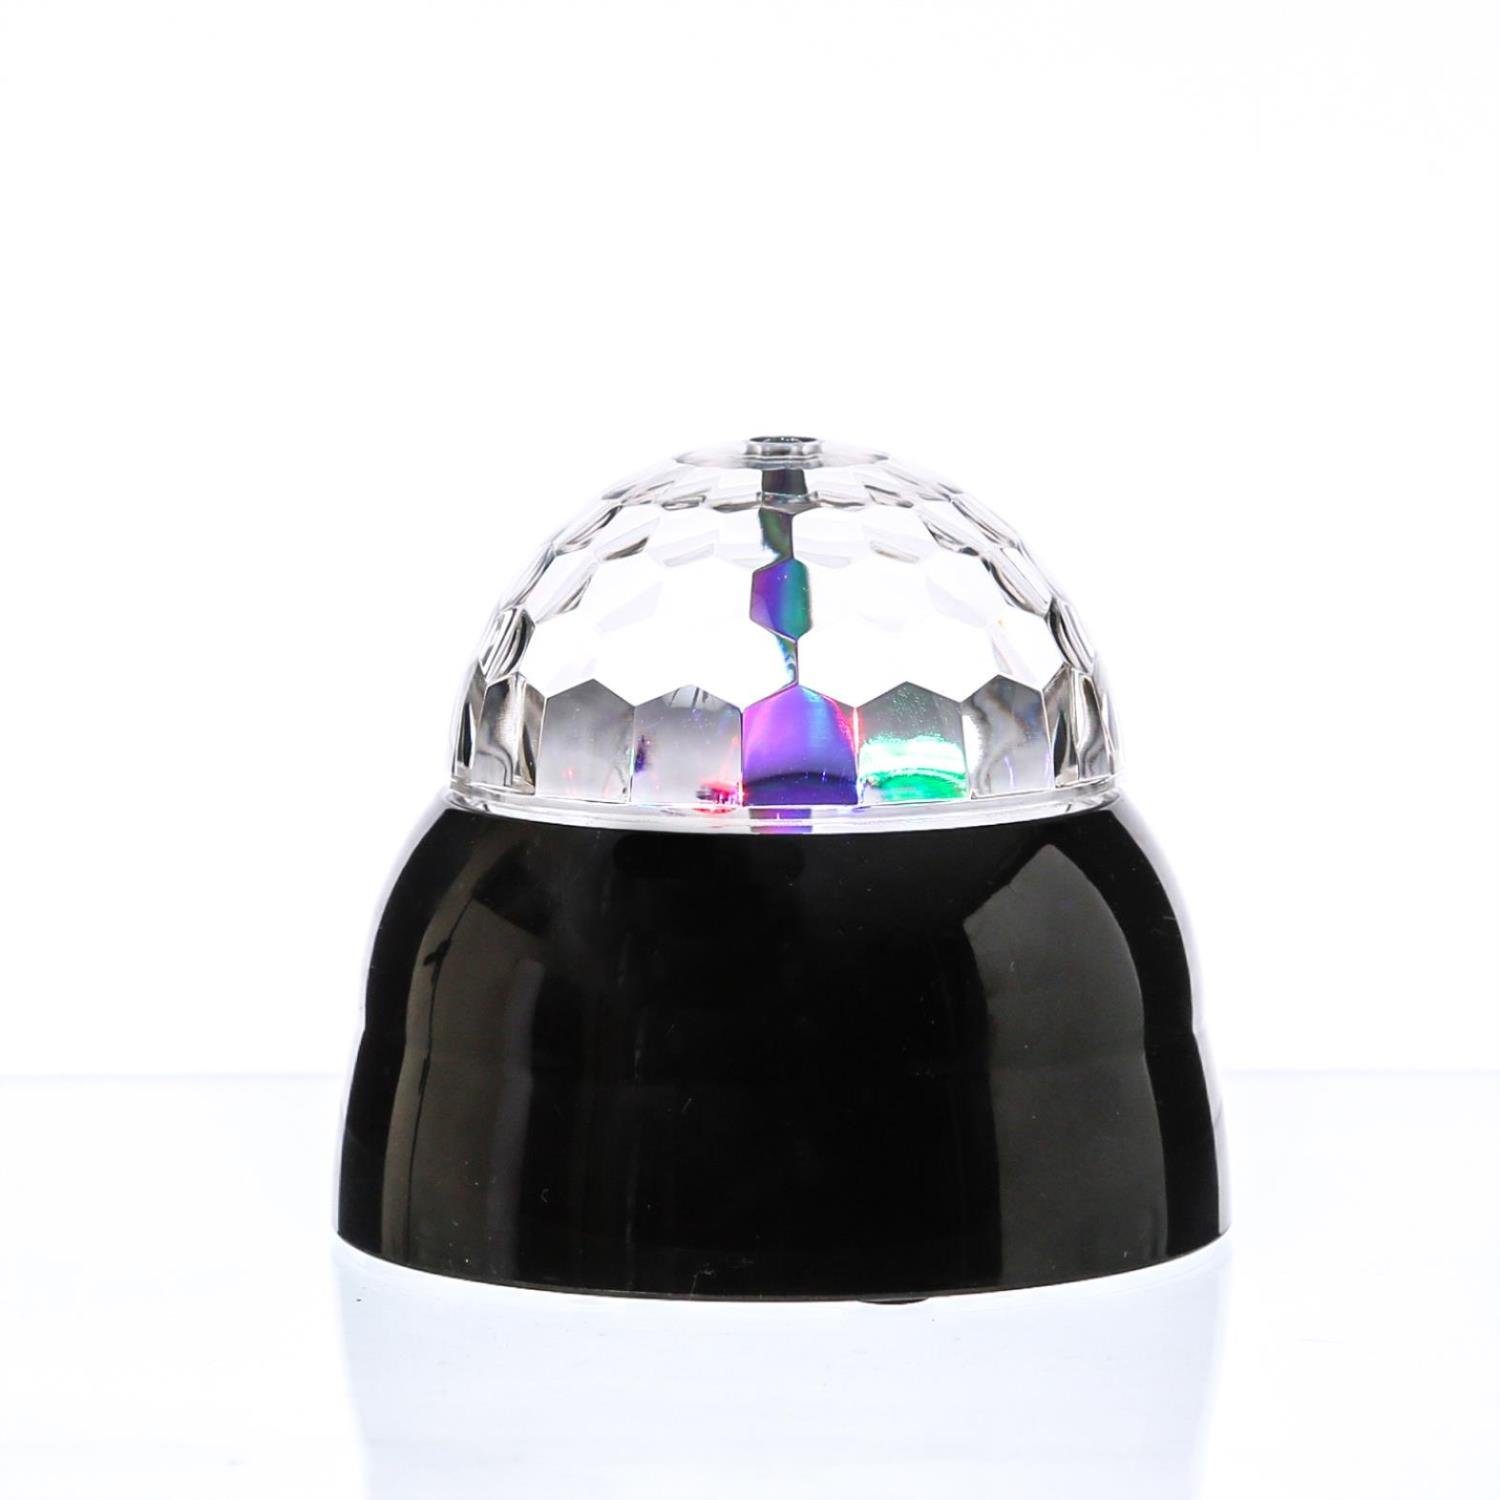 Showlite Discolicht PBM-5 Mini-Party-Ball, LED fest integriert,  Farbwechsler, kleine LED Discokugel für Party, Bar, mobile DJs